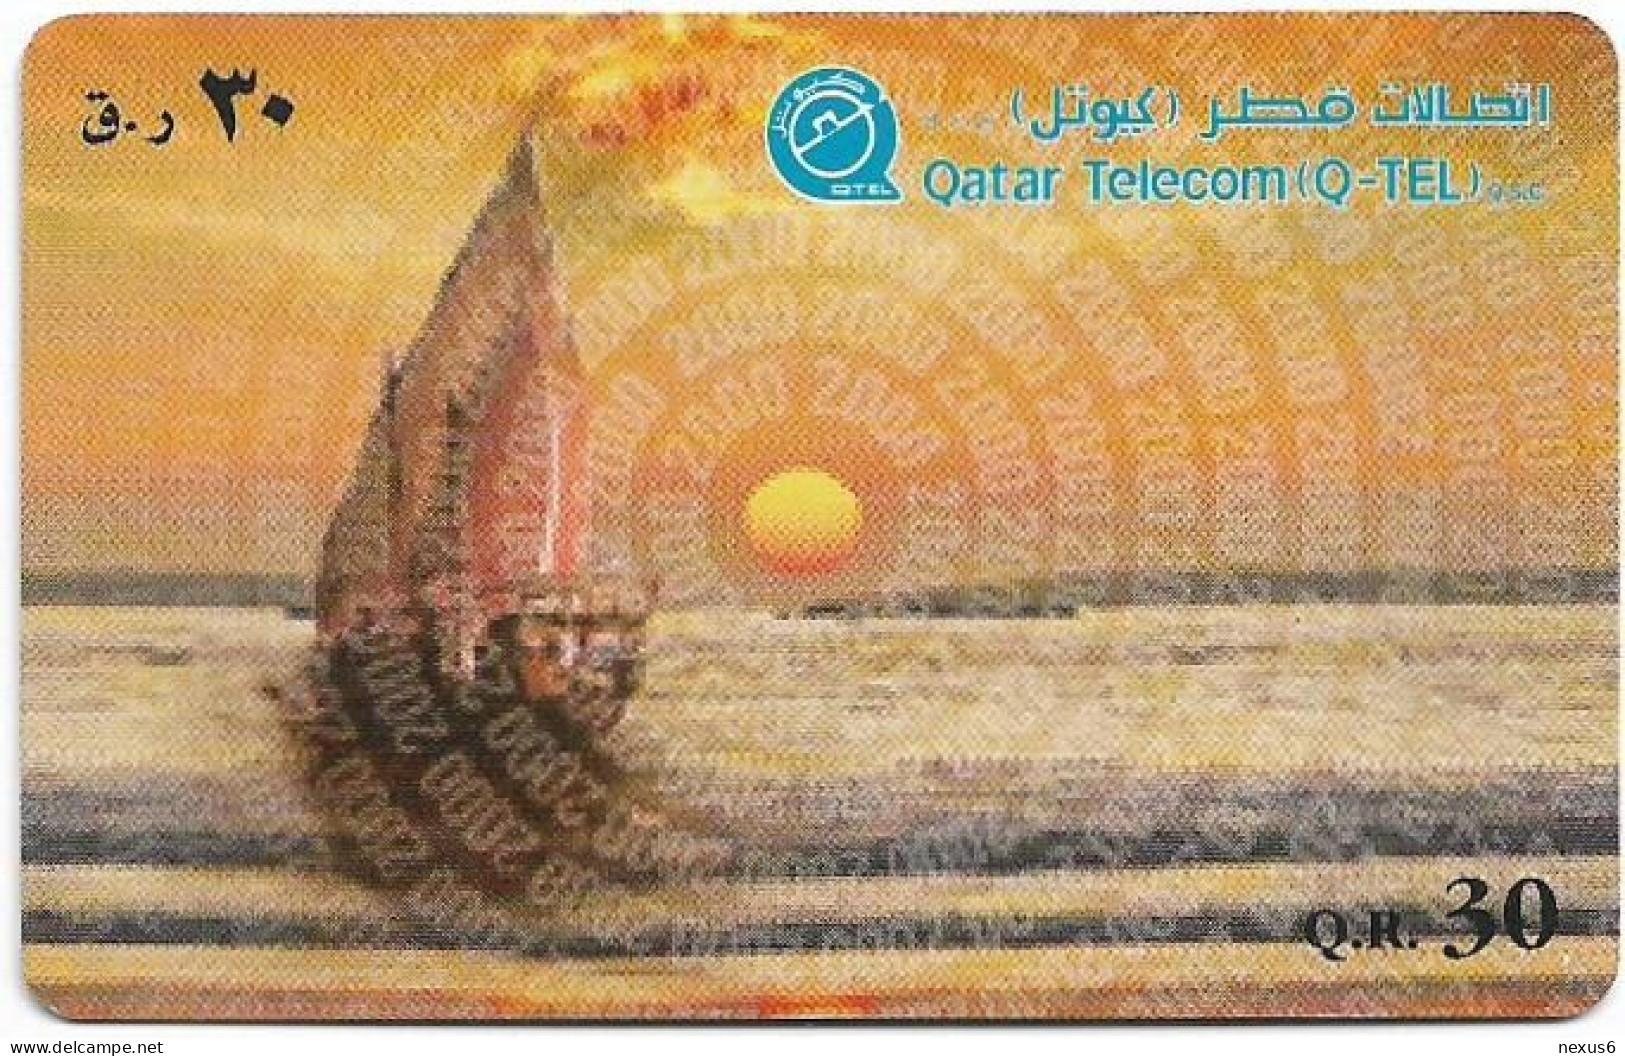 Qatar - Q-Tel - Autelca - Dhow, Call Now 197, 2000, 30QR, Used - Qatar